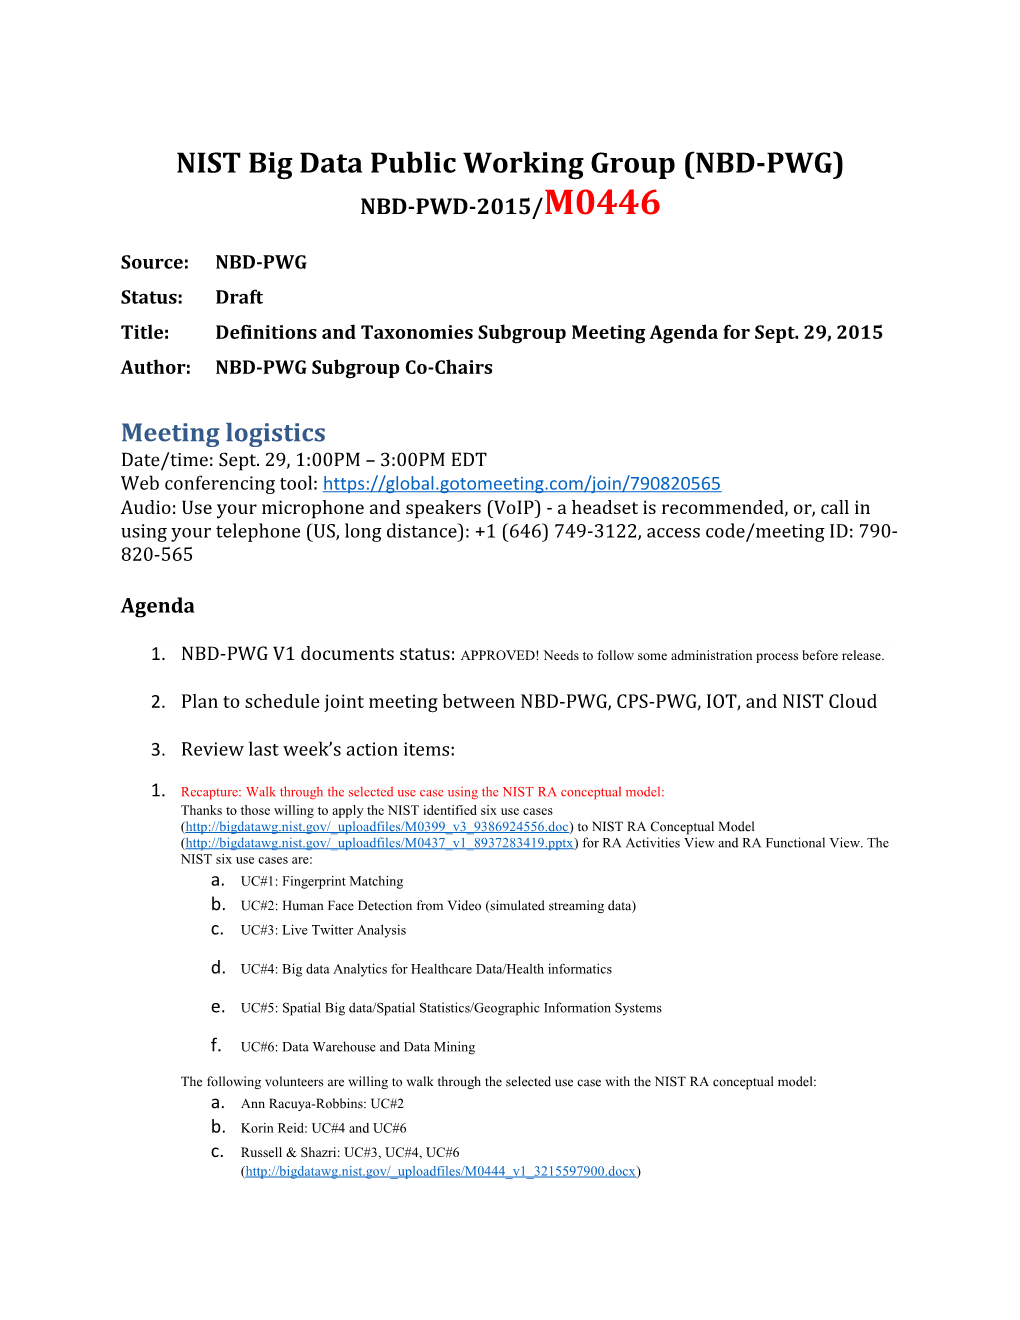 NIST Big Data Public Working Group (NBD-PWG) s1